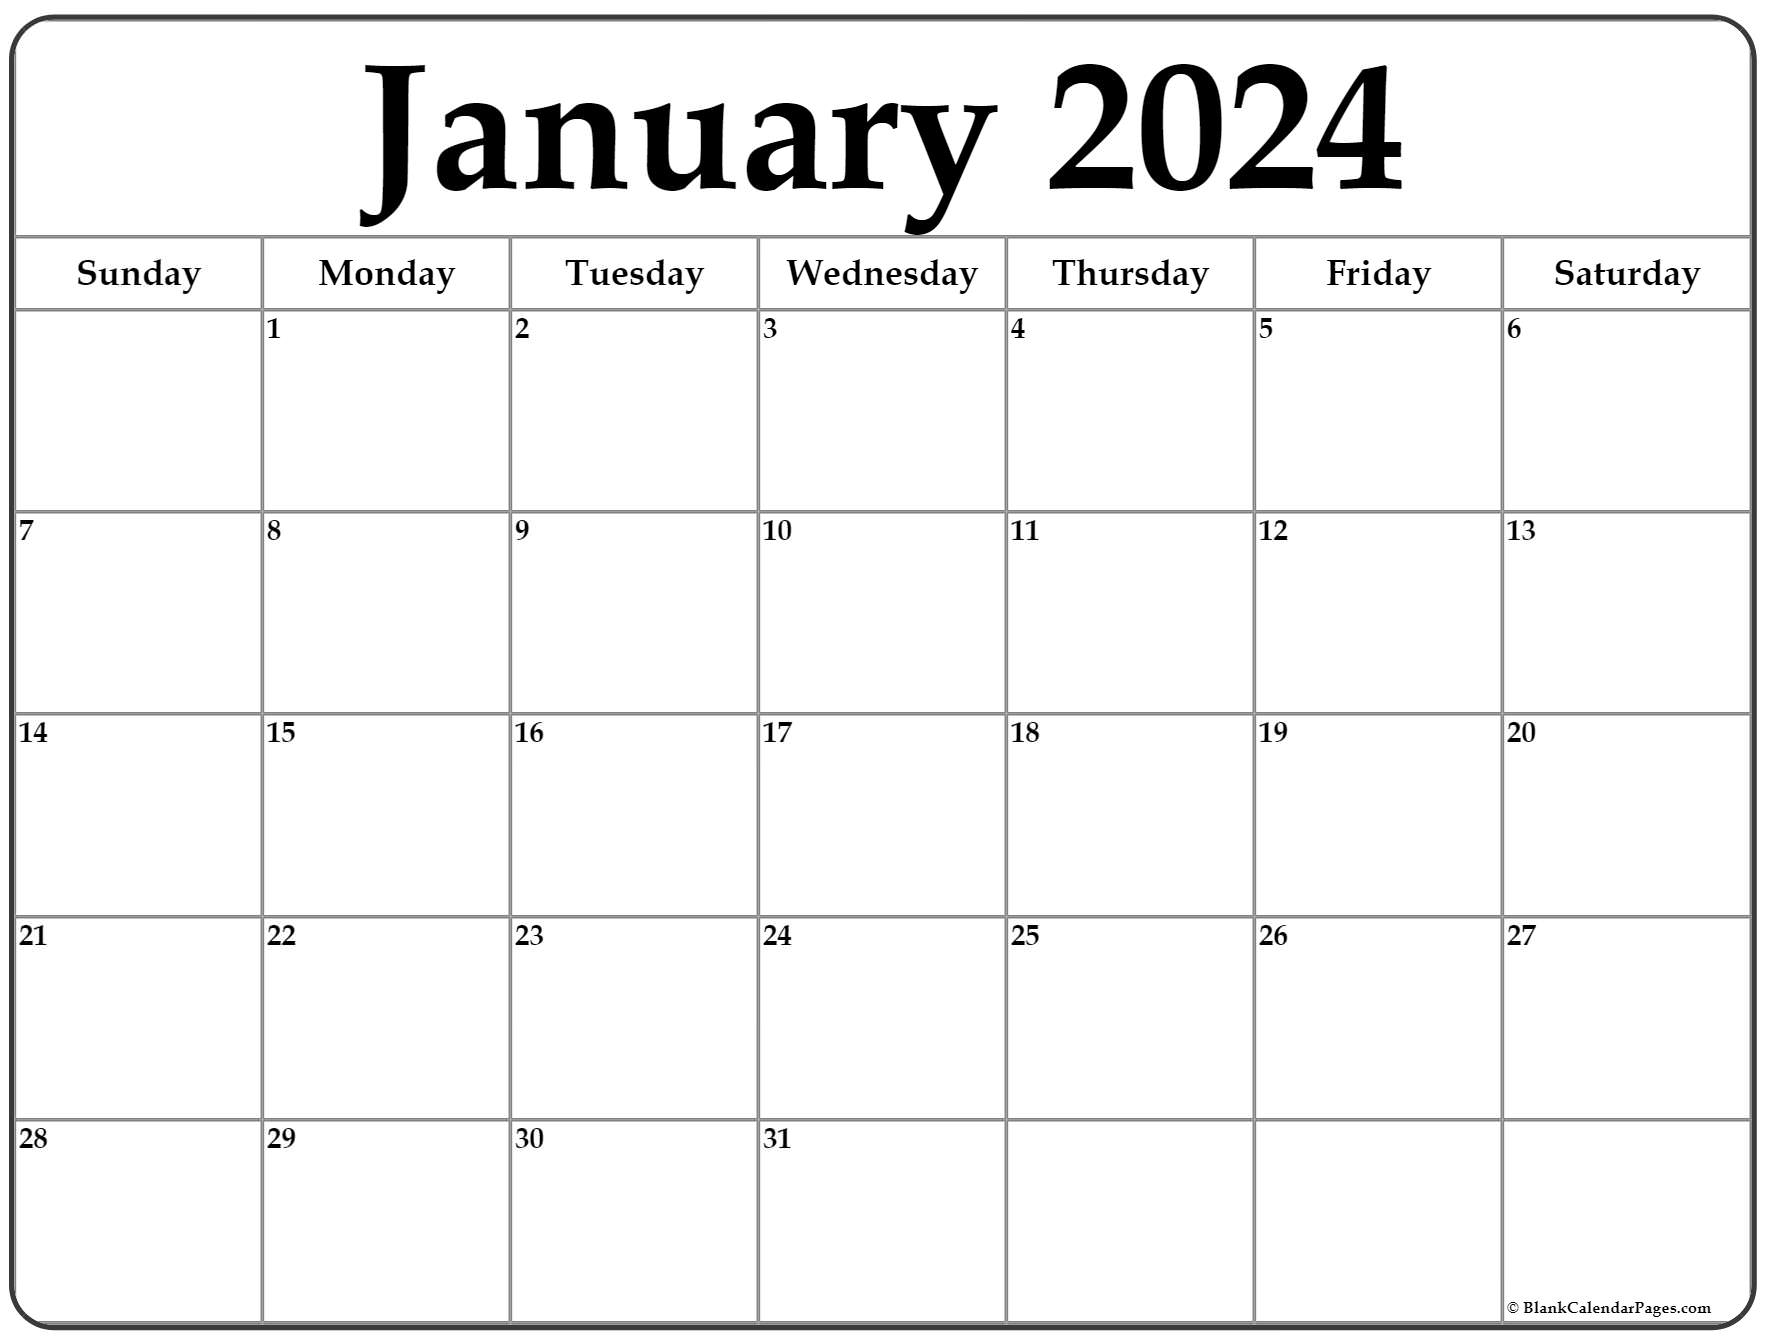 January 2024 Calendar | Free Printable Calendar for Free Printable 2024 Calendar Pages